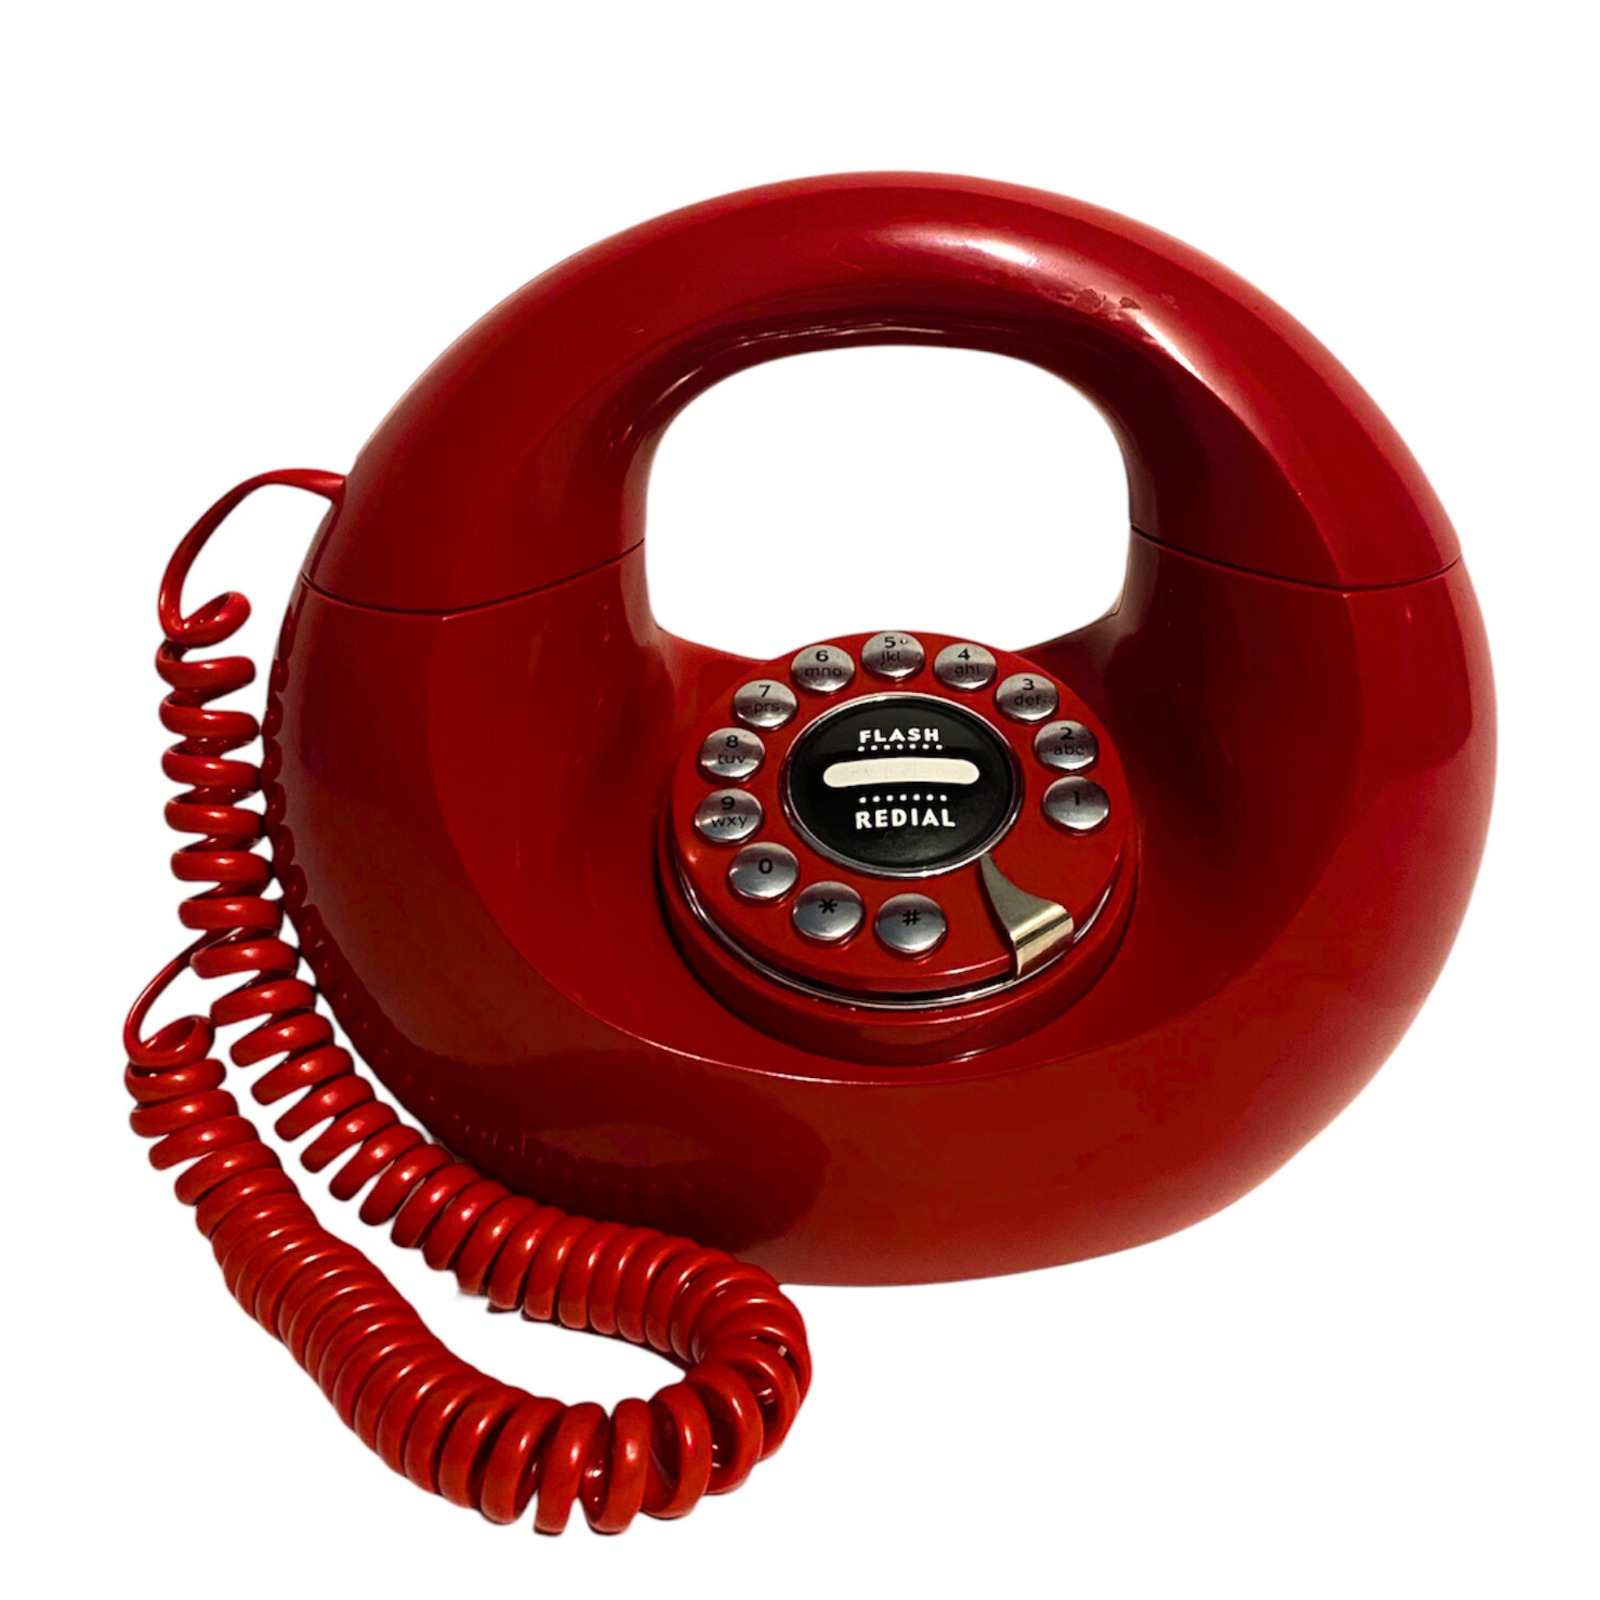 1970 HANDBAG PHONE Vintage Retro Pushbutton Donut Telephone RED 